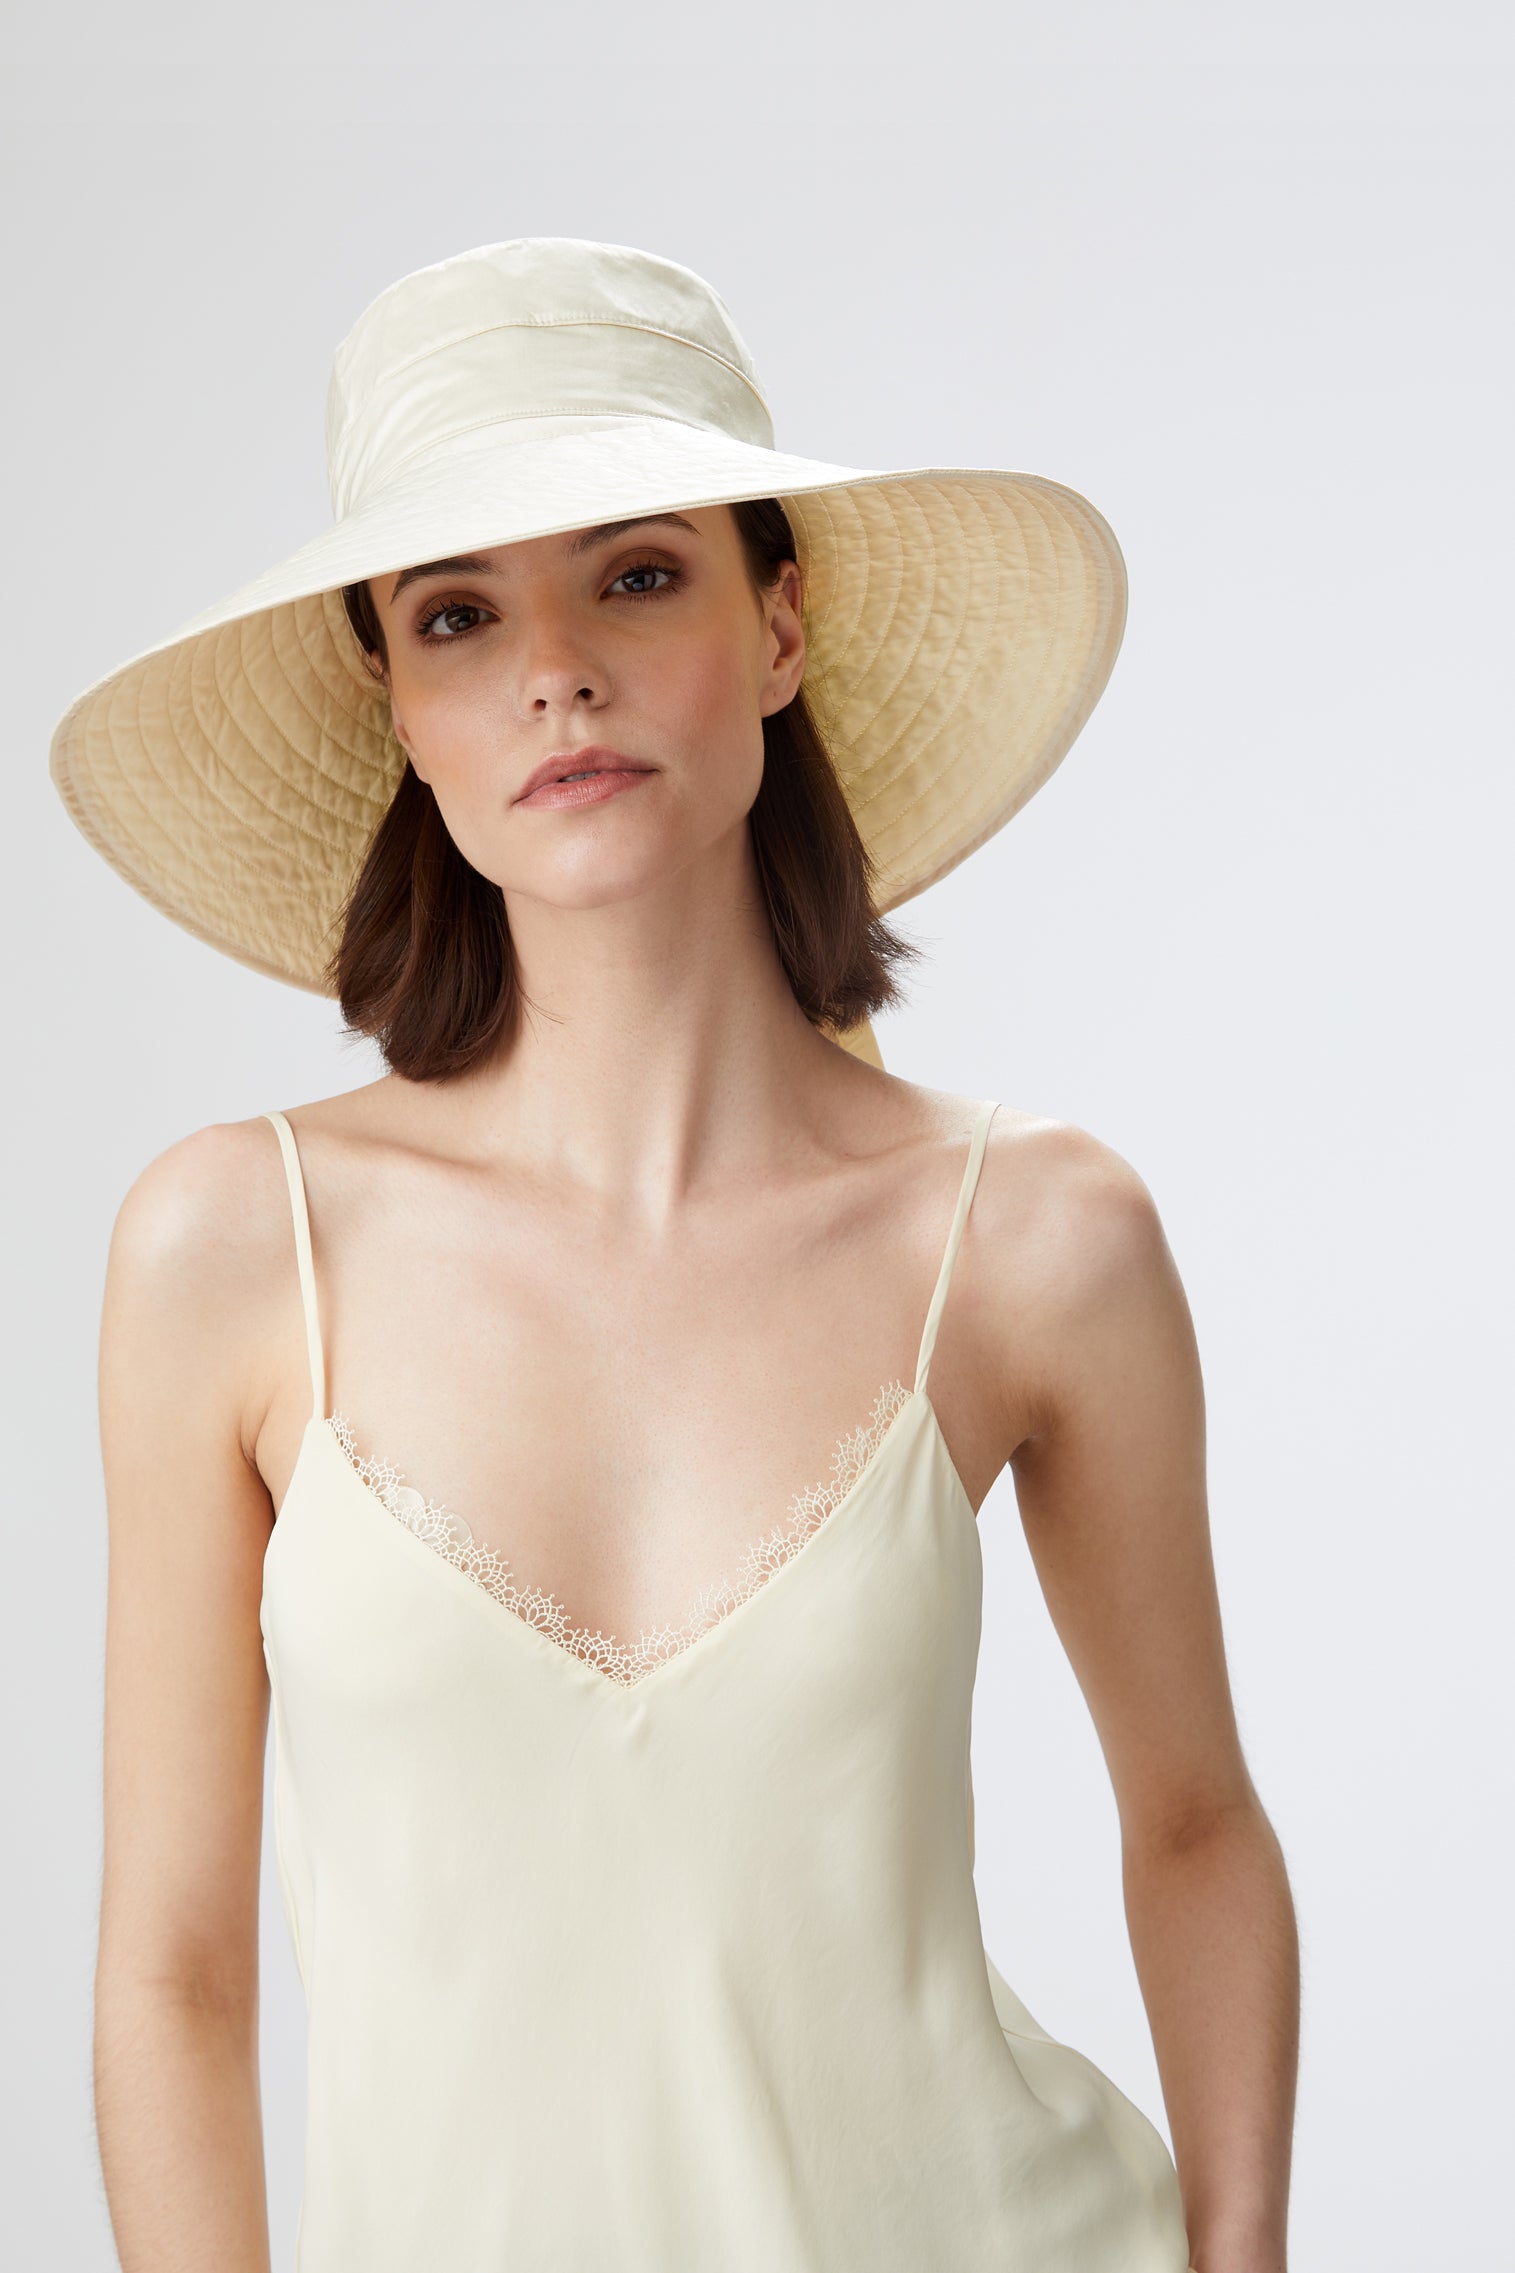 Clemence Silk Sun Hat - Panamas, Straw and Sun Hats for Women - Lock & Co. Hatters London UK